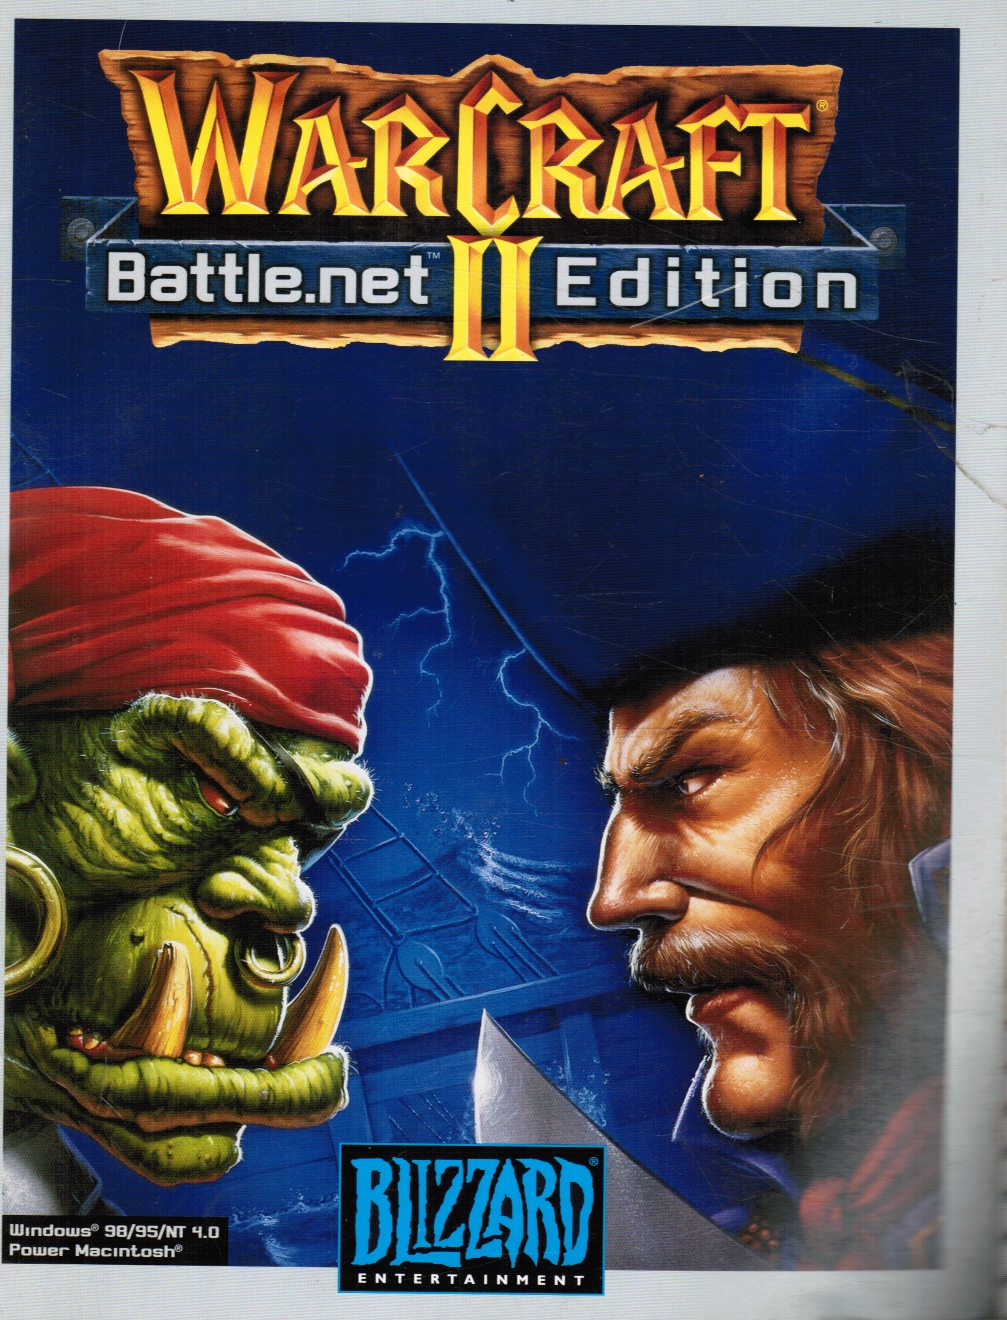 BLIZZARD ENTERTAINMENT EDITORS - Warcraft Ii: Battle. Net Edition User's Manual